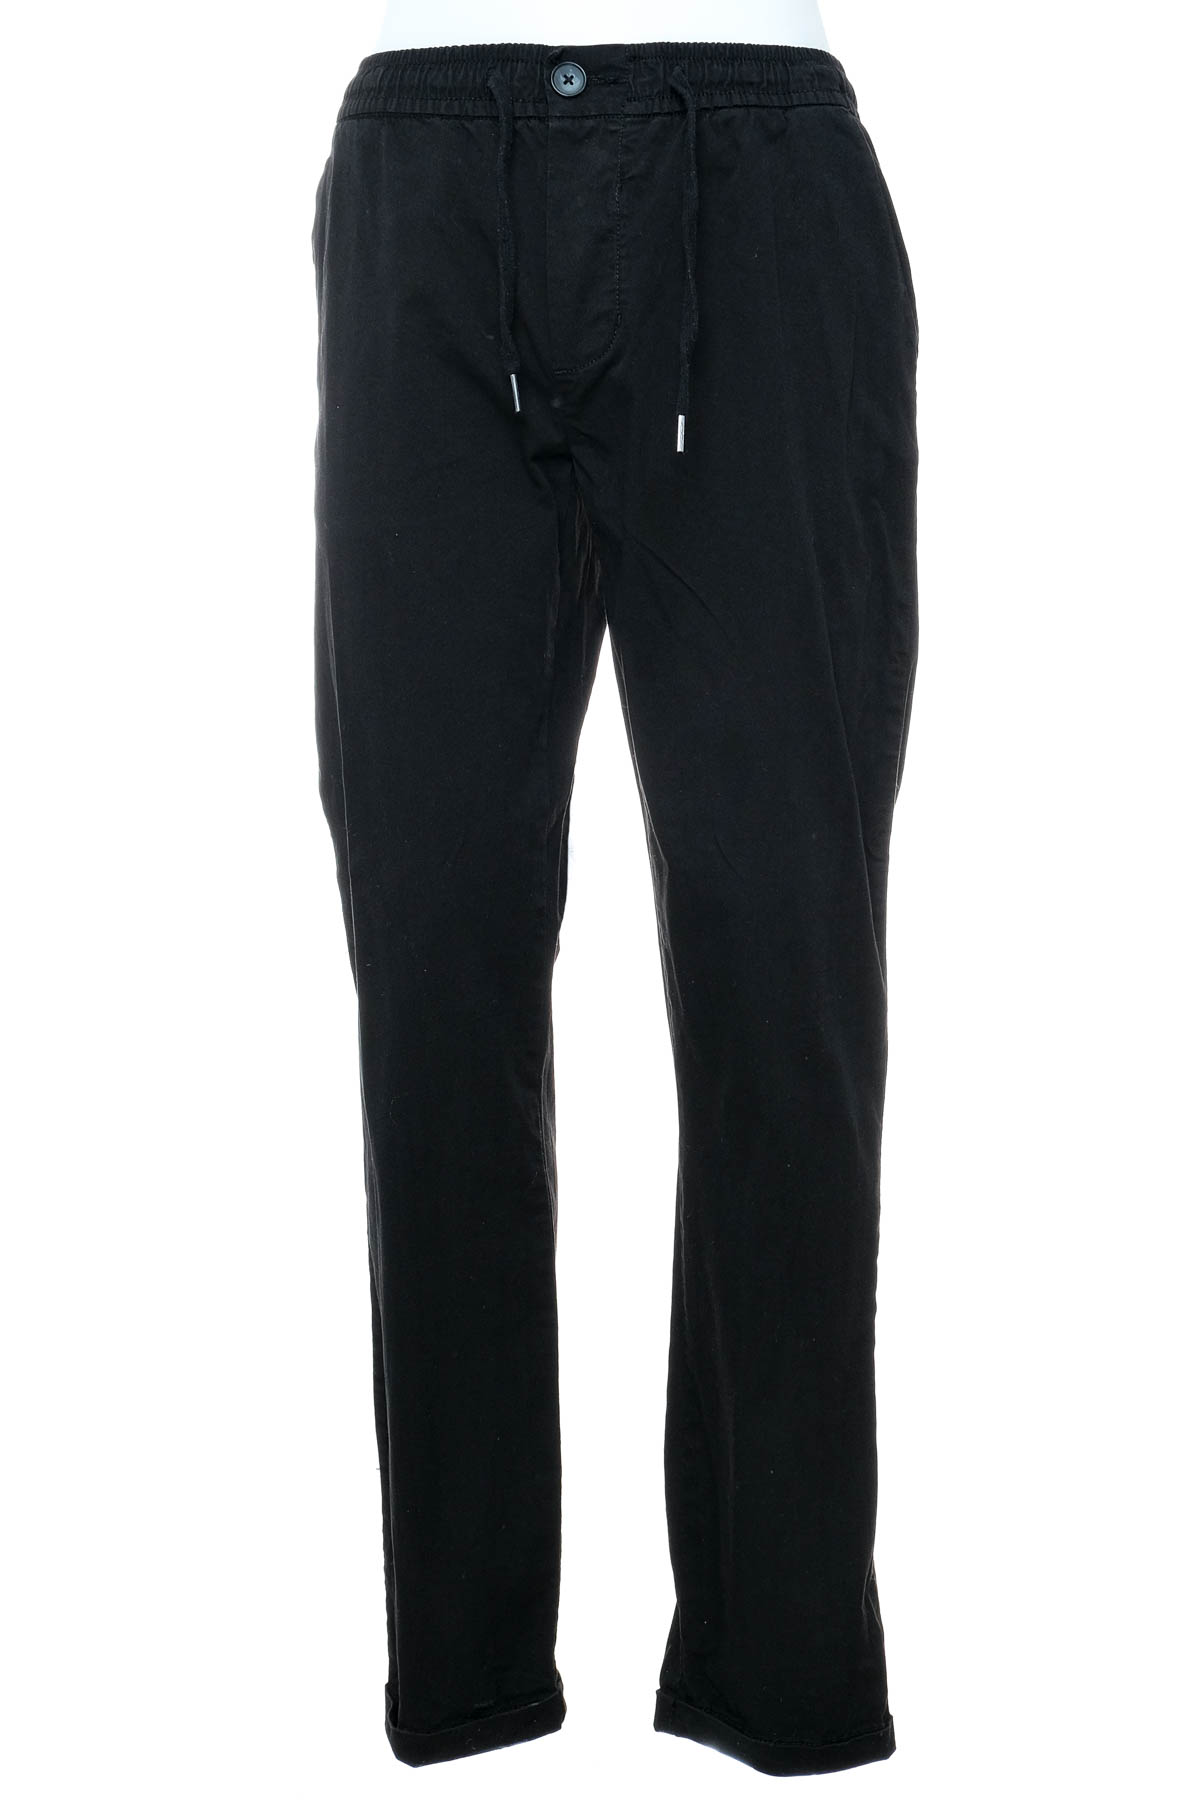 Pantalon pentru bărbați - REDEFINED REBEL - 0